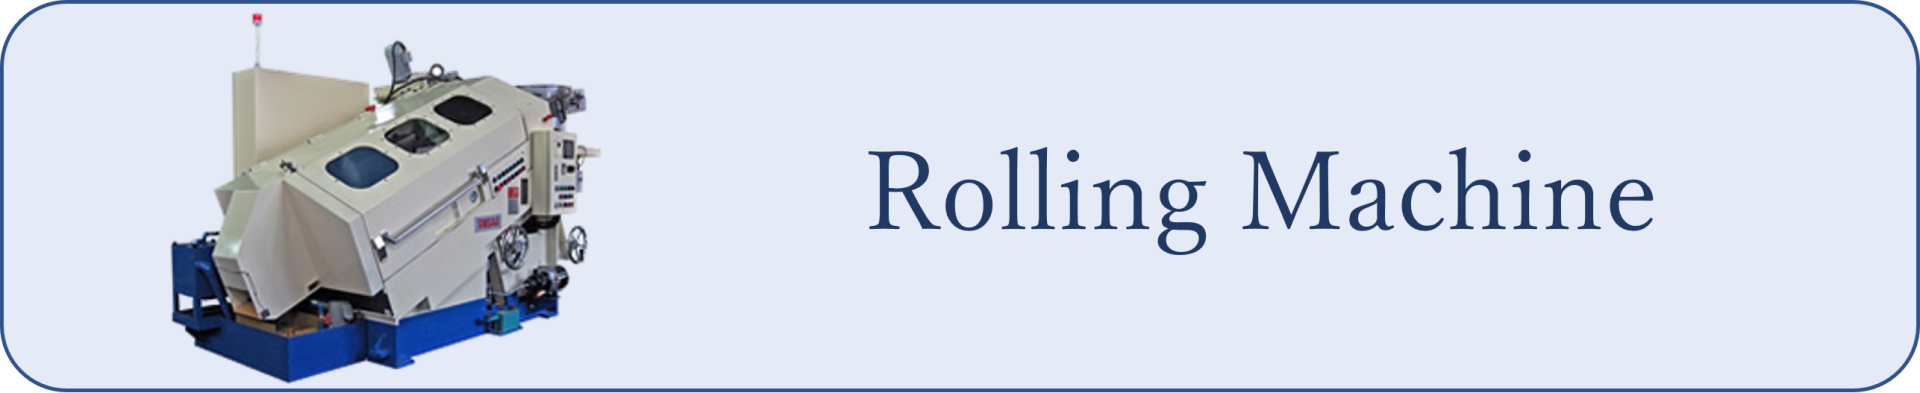 link_Rolling Machine